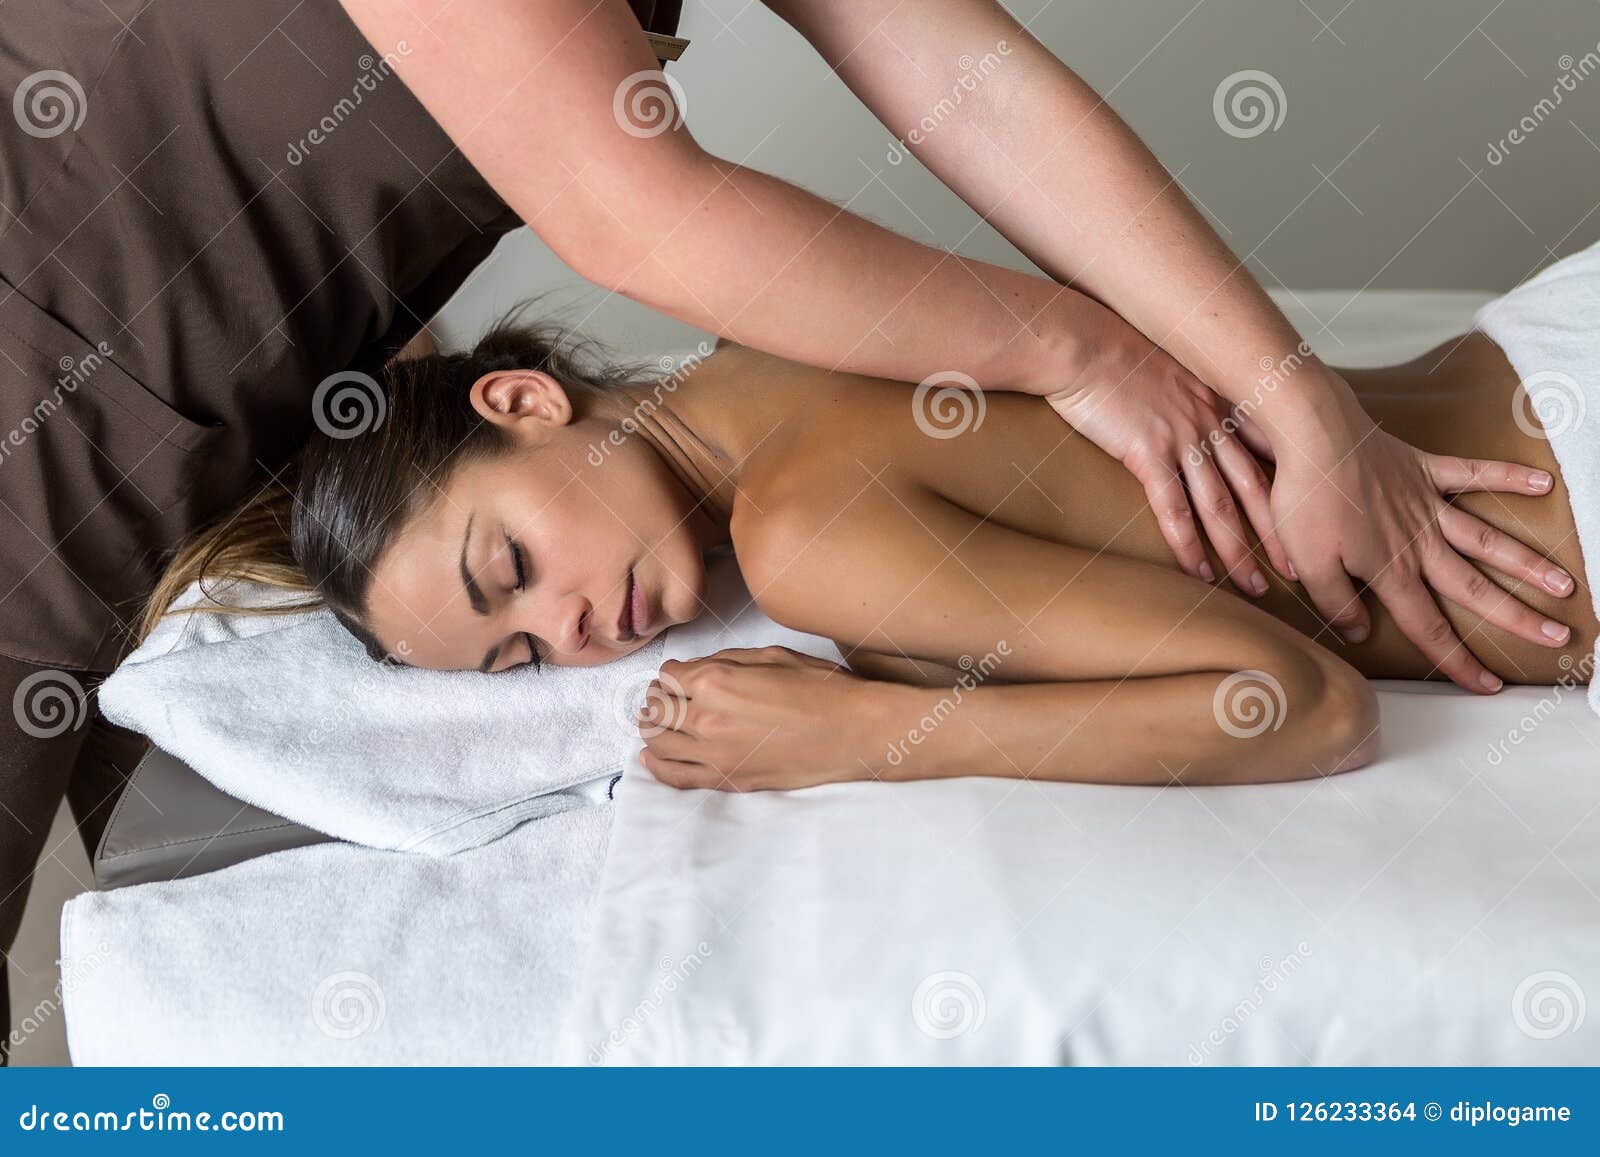 Lovely women relaxing sensual massage